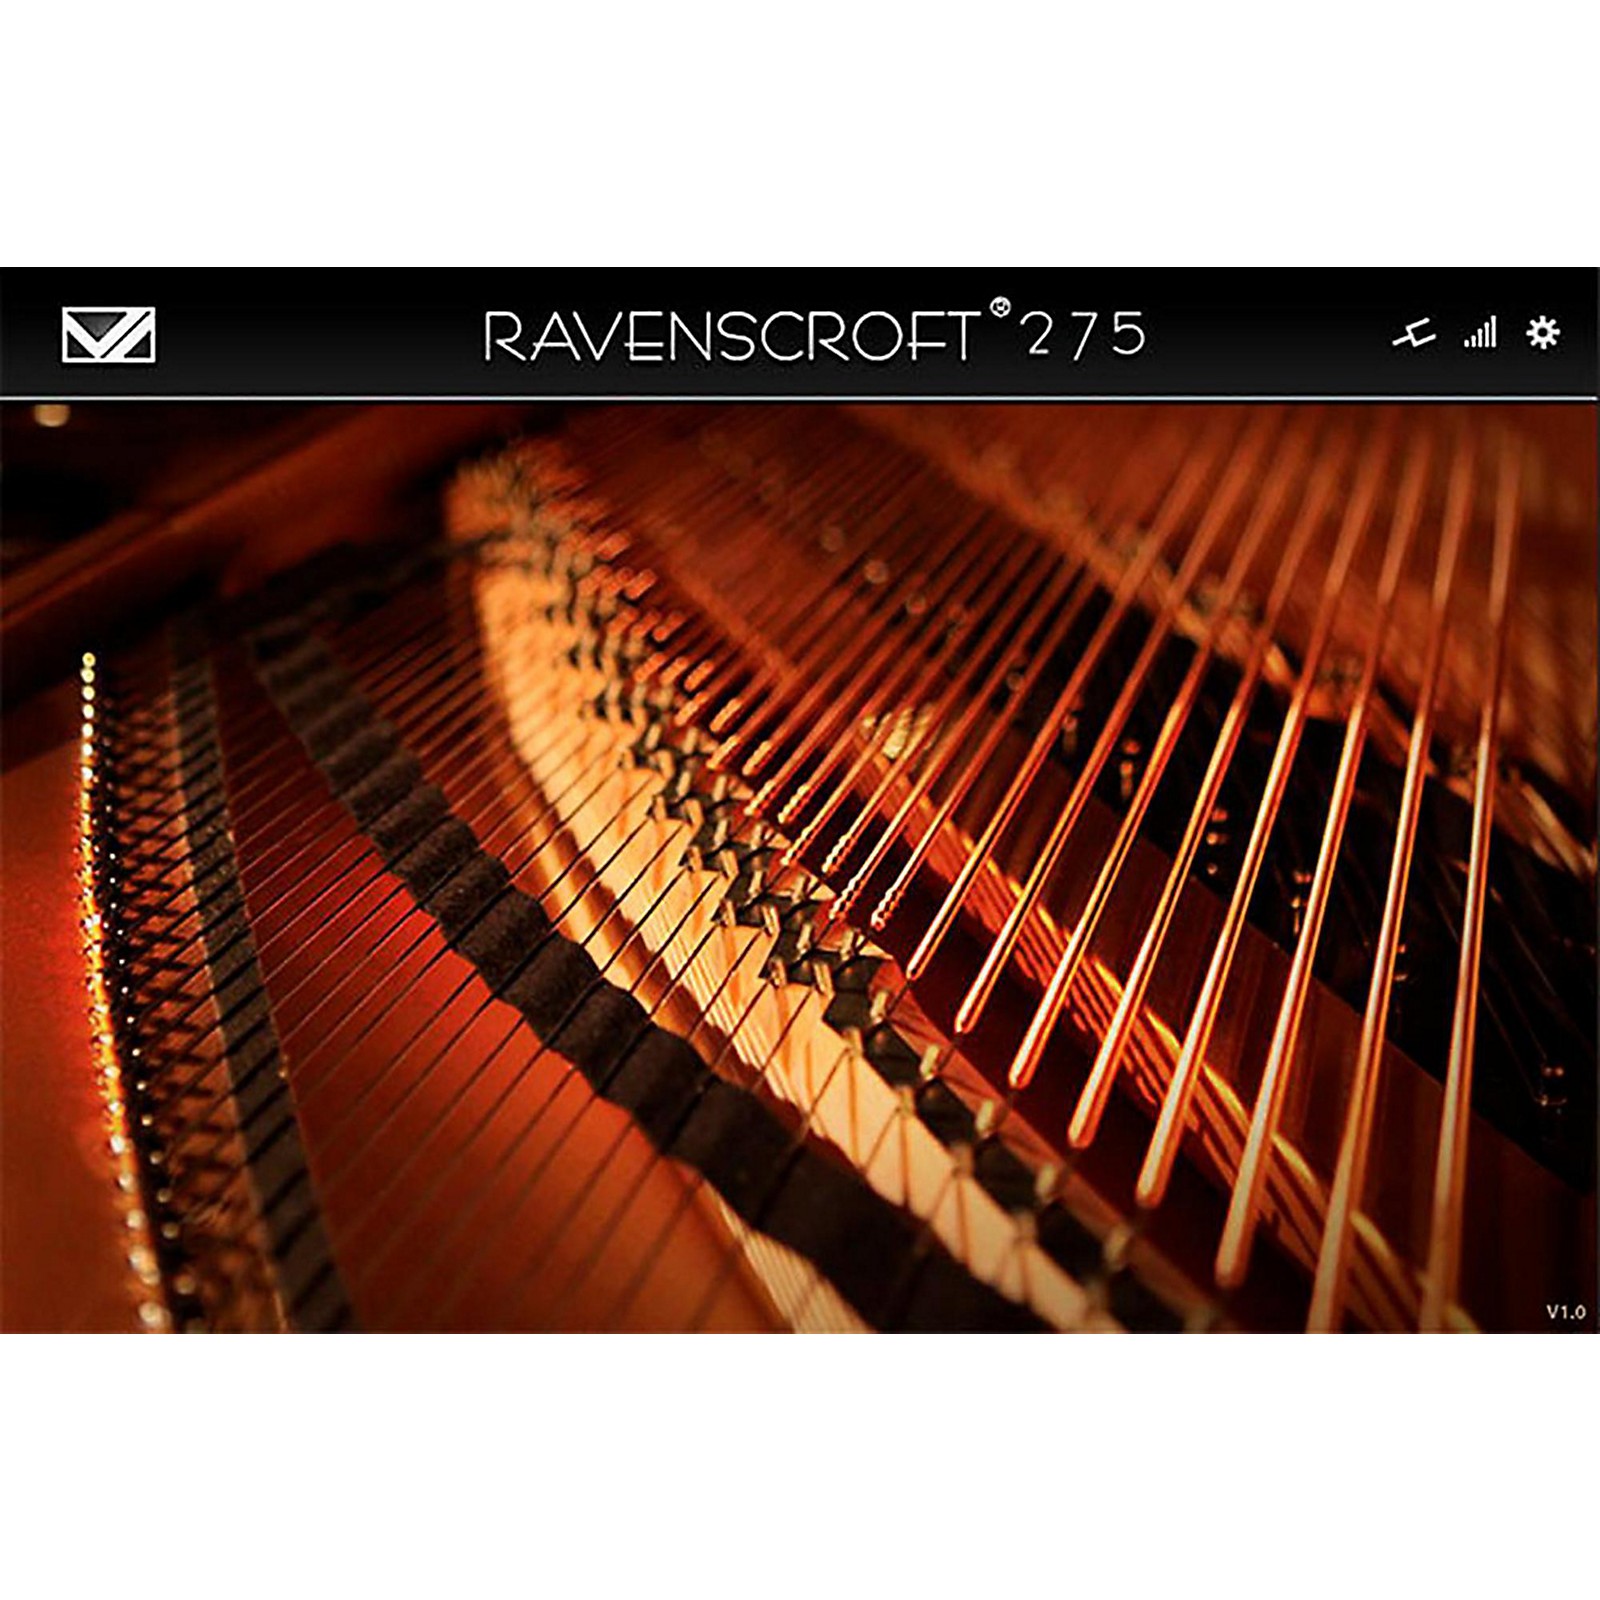 ravenscroft 275 presets